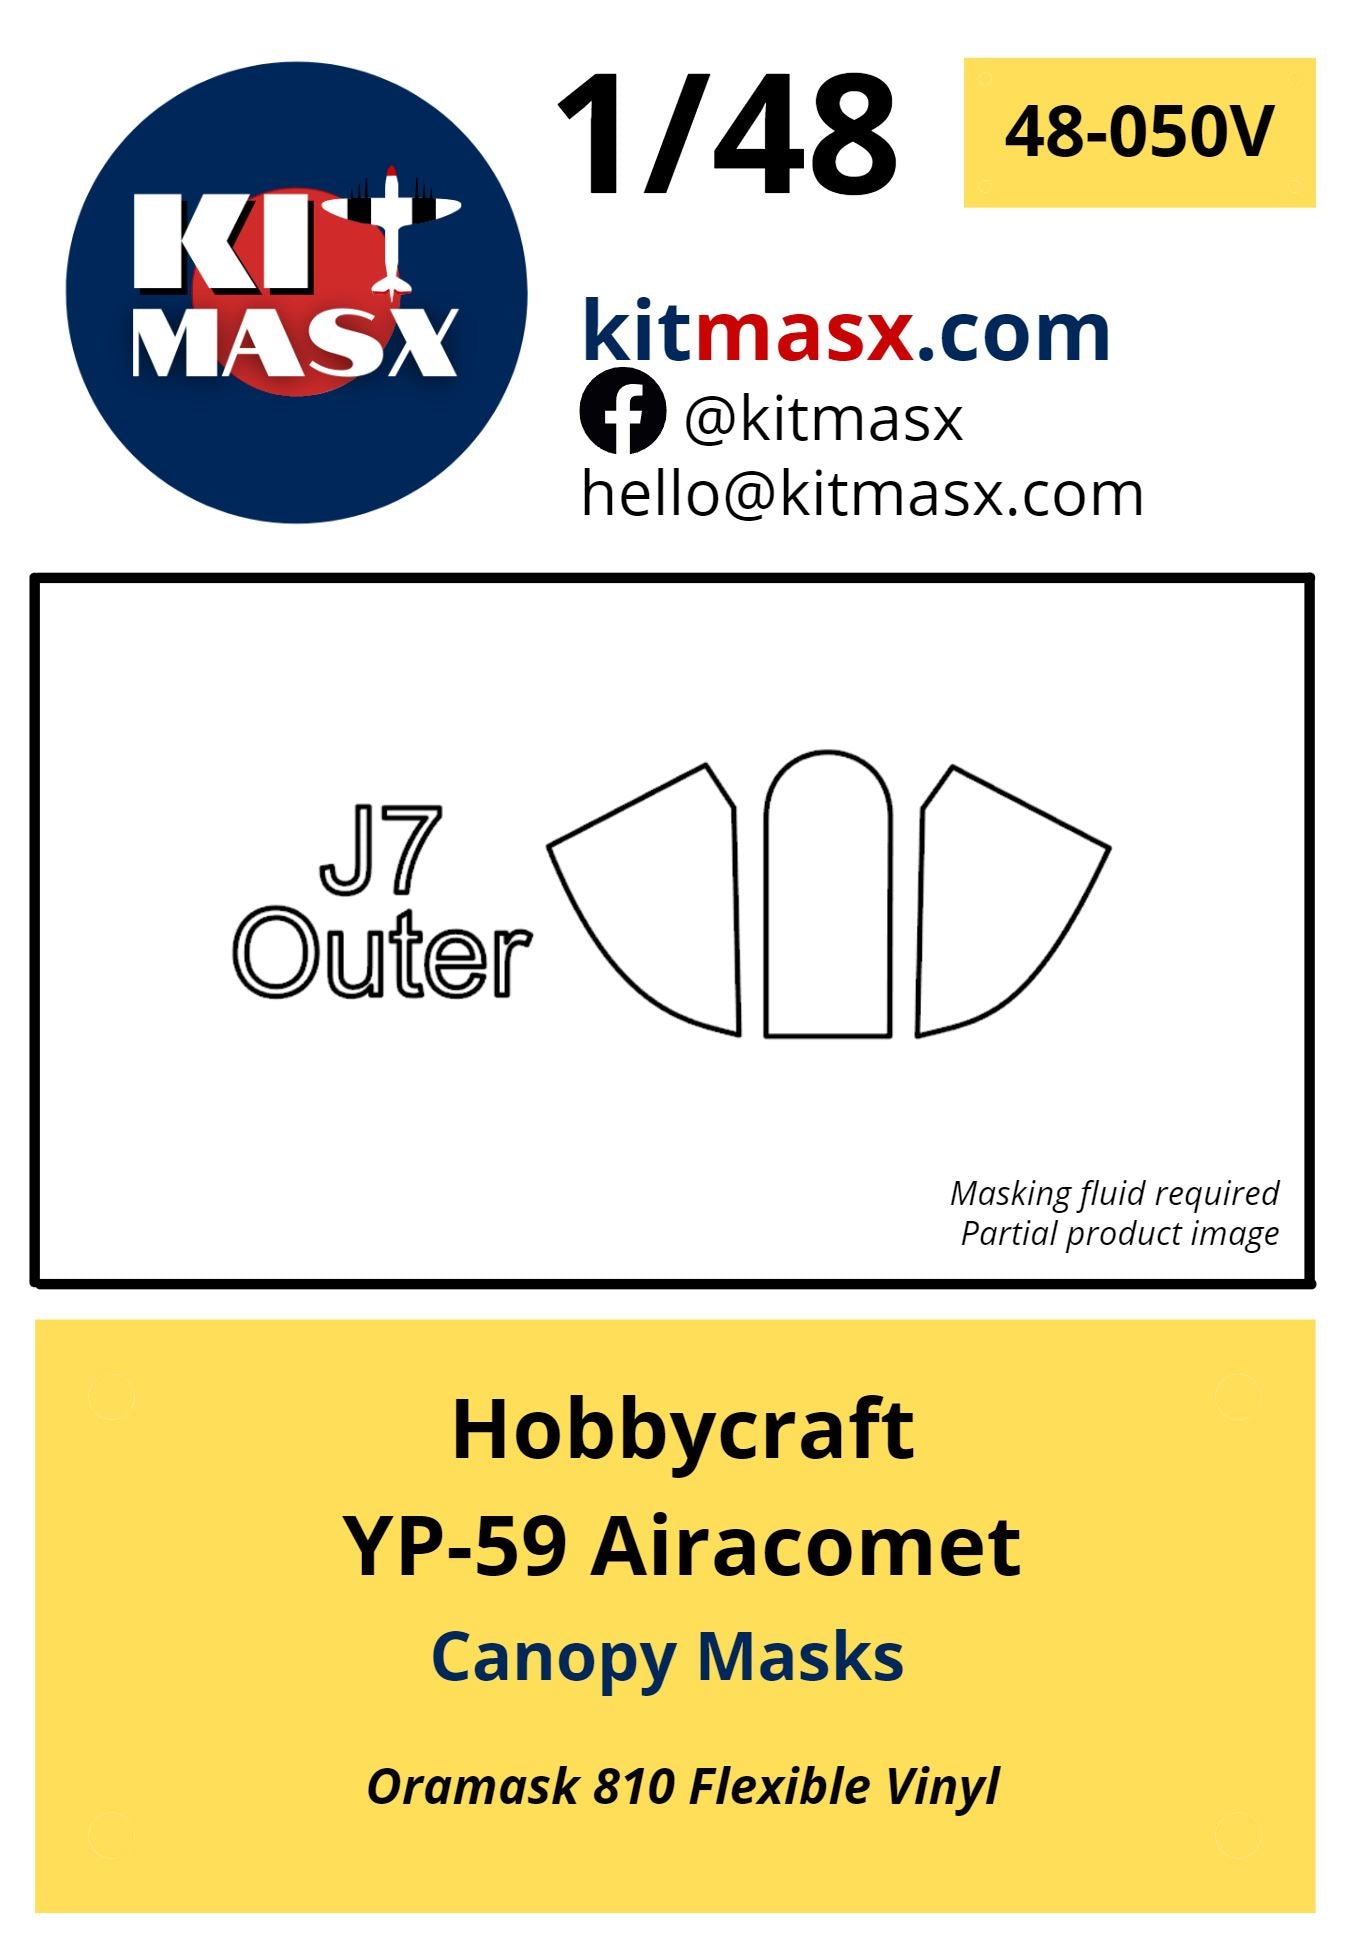 Hobbycraft YP-59 Airacomet Canopy Masks Kit Masx 